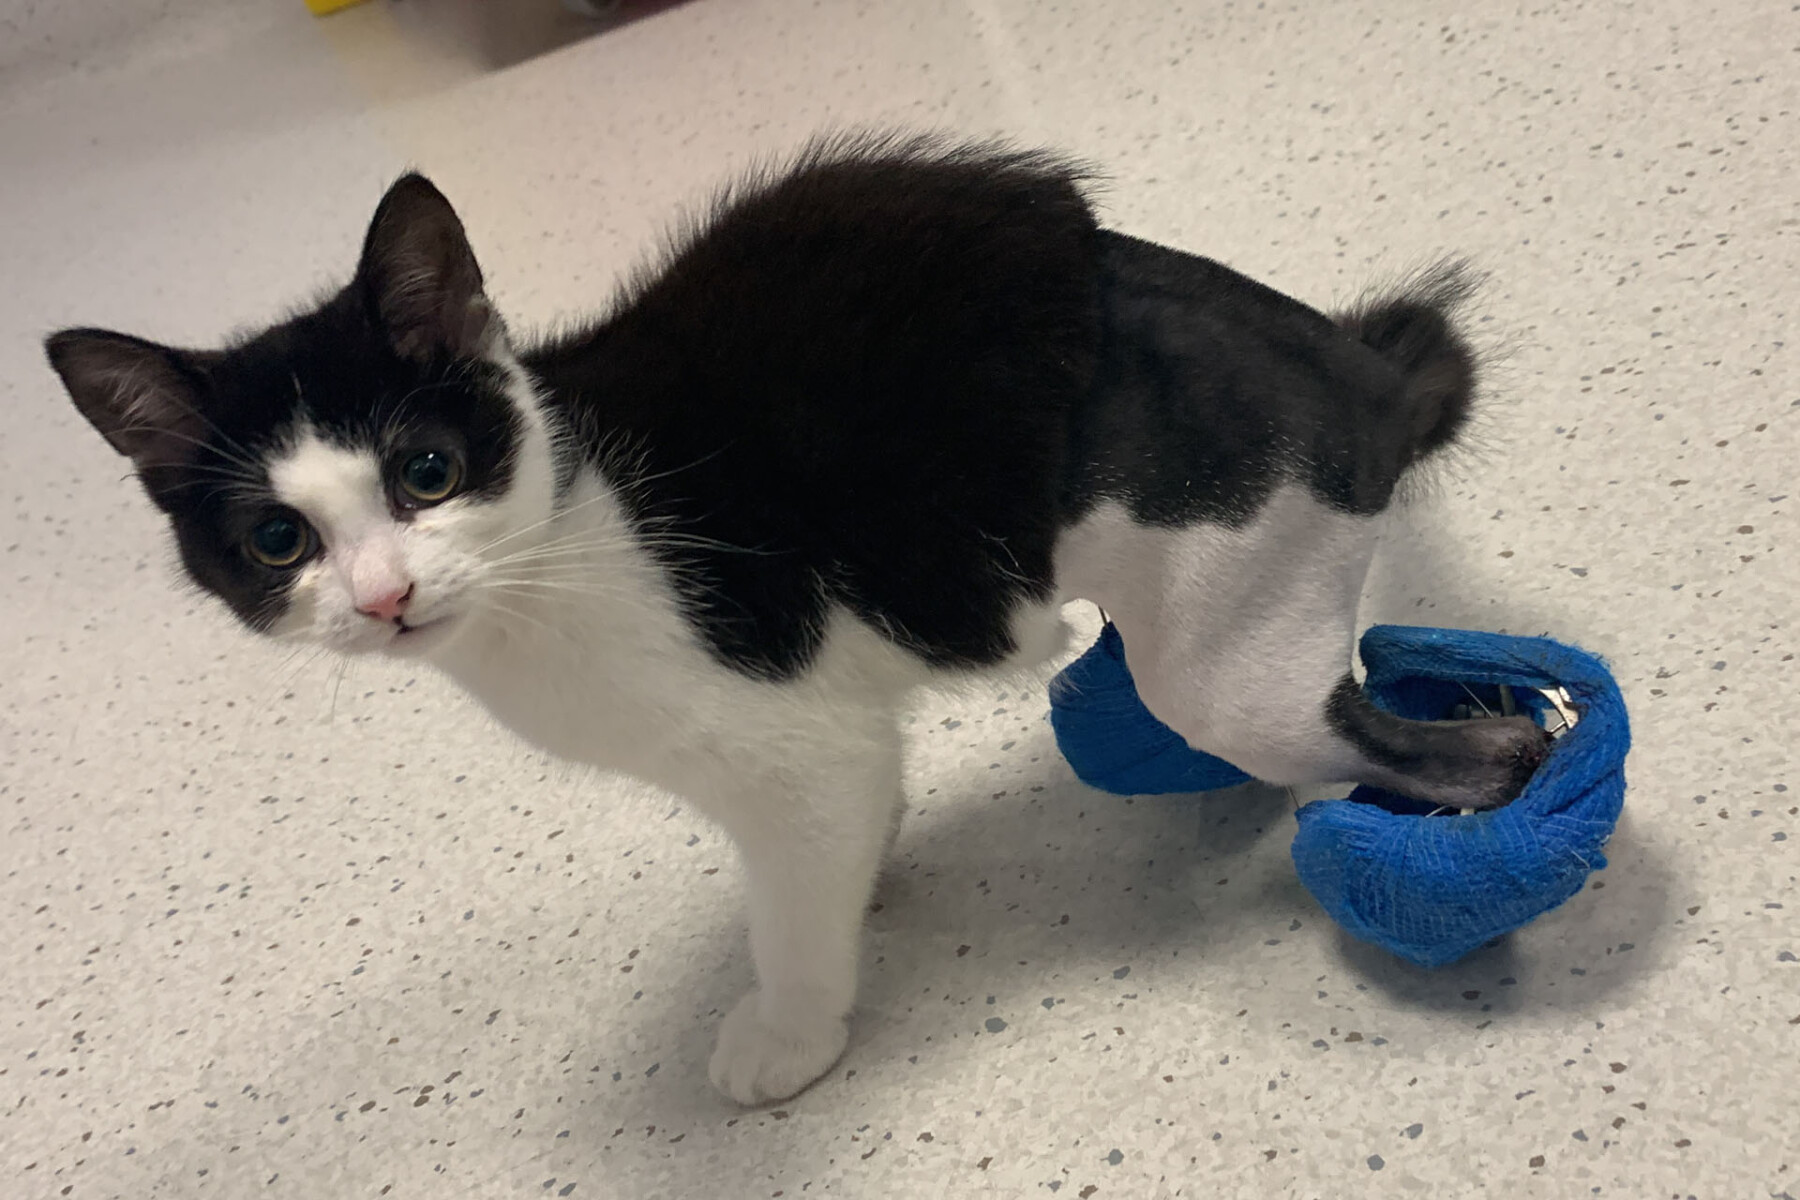 Kitten after surgery to correct her limb deformities